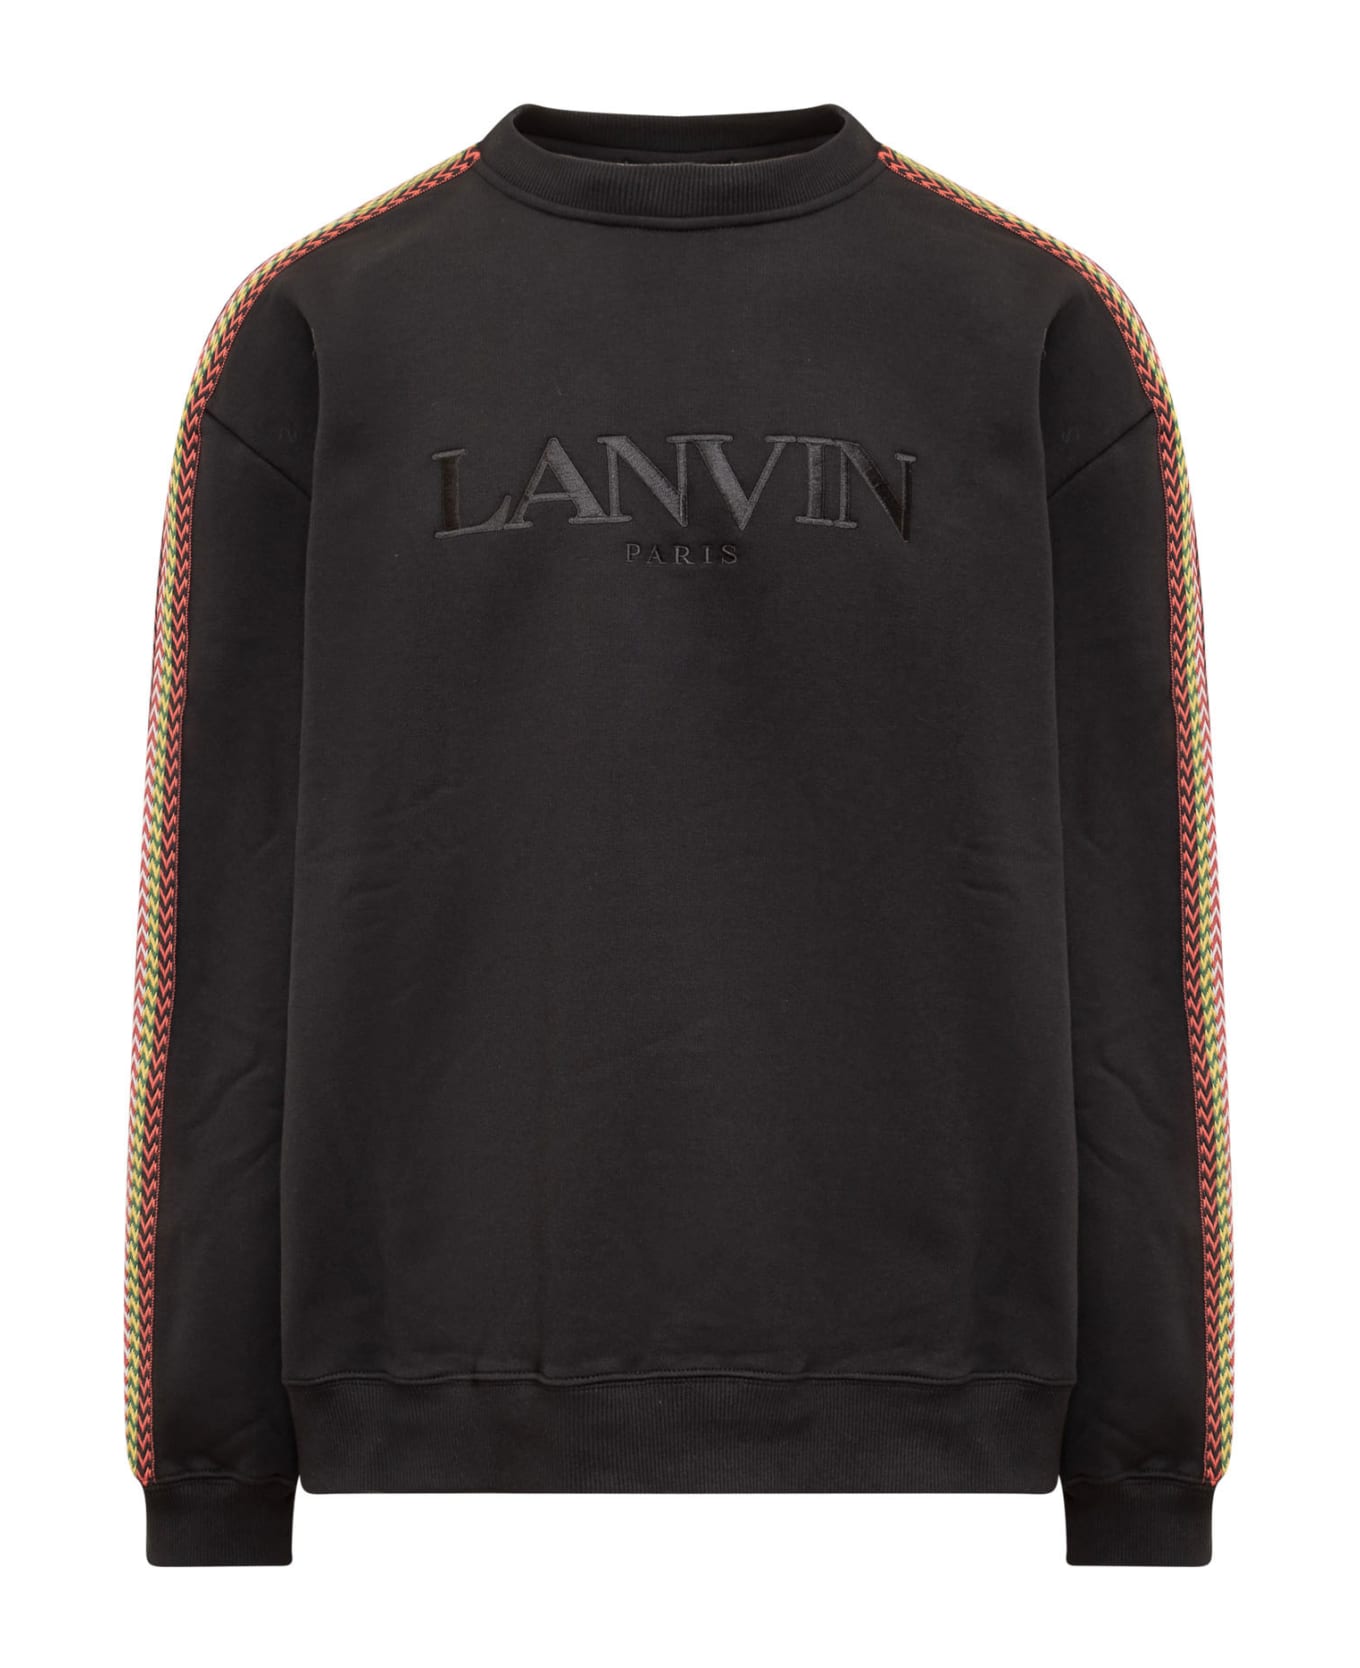 Lanvin Sweatshirt With Logo - Black